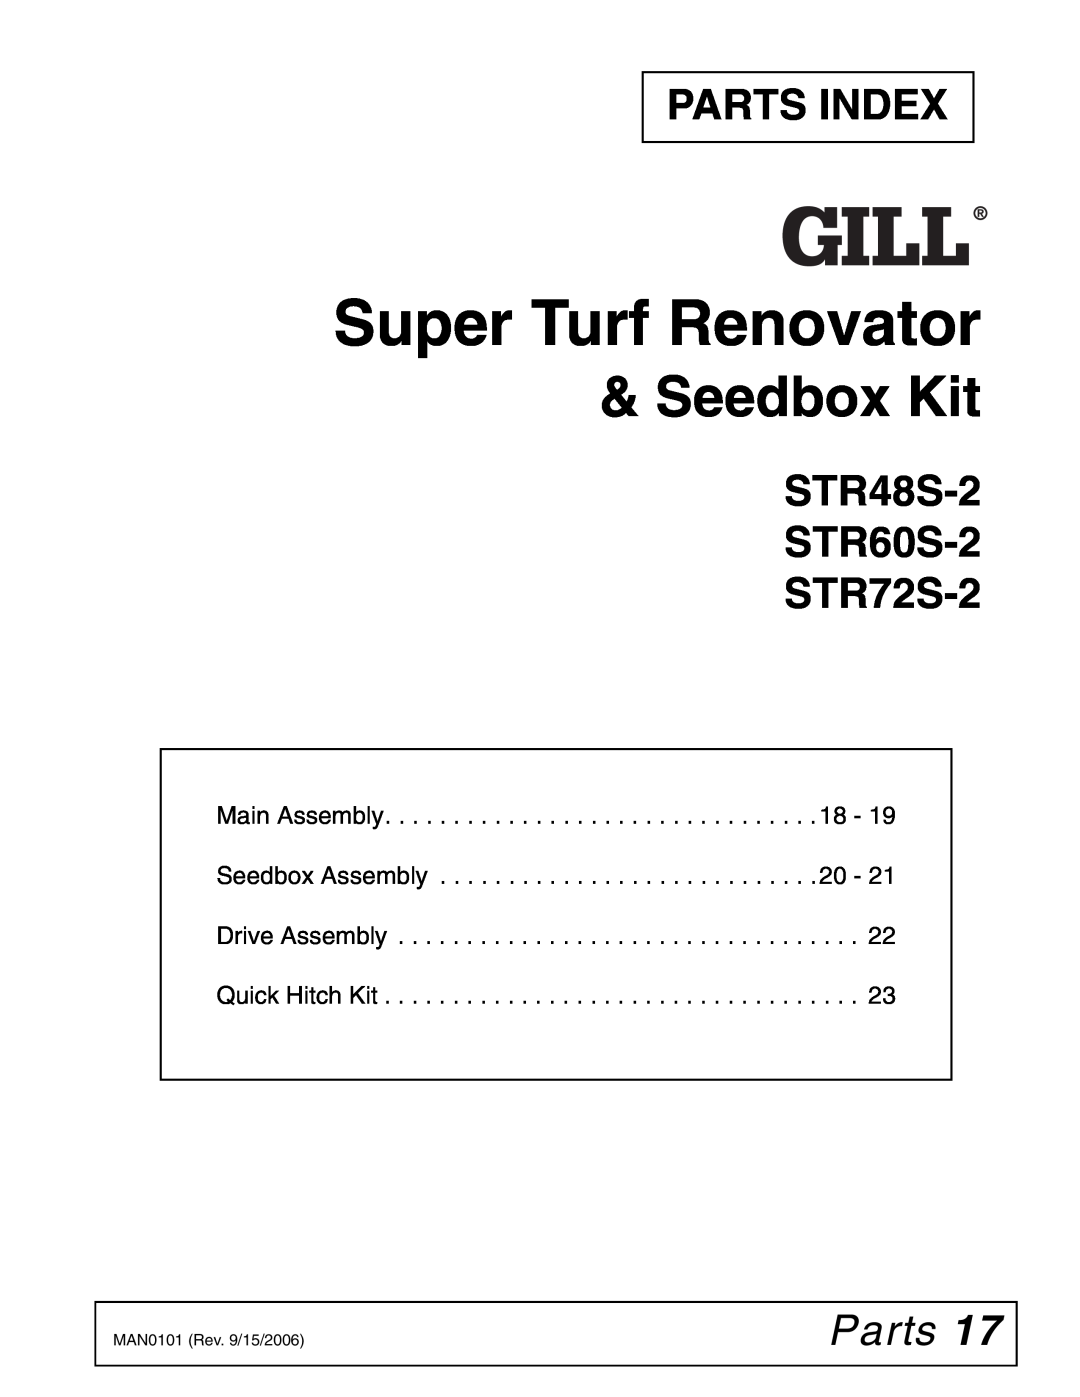 Woods Equipment manual Super Turf Renovator, Seedbox Kit, Parts Index, STR48S-2 STR60S-2 STR72S-2 